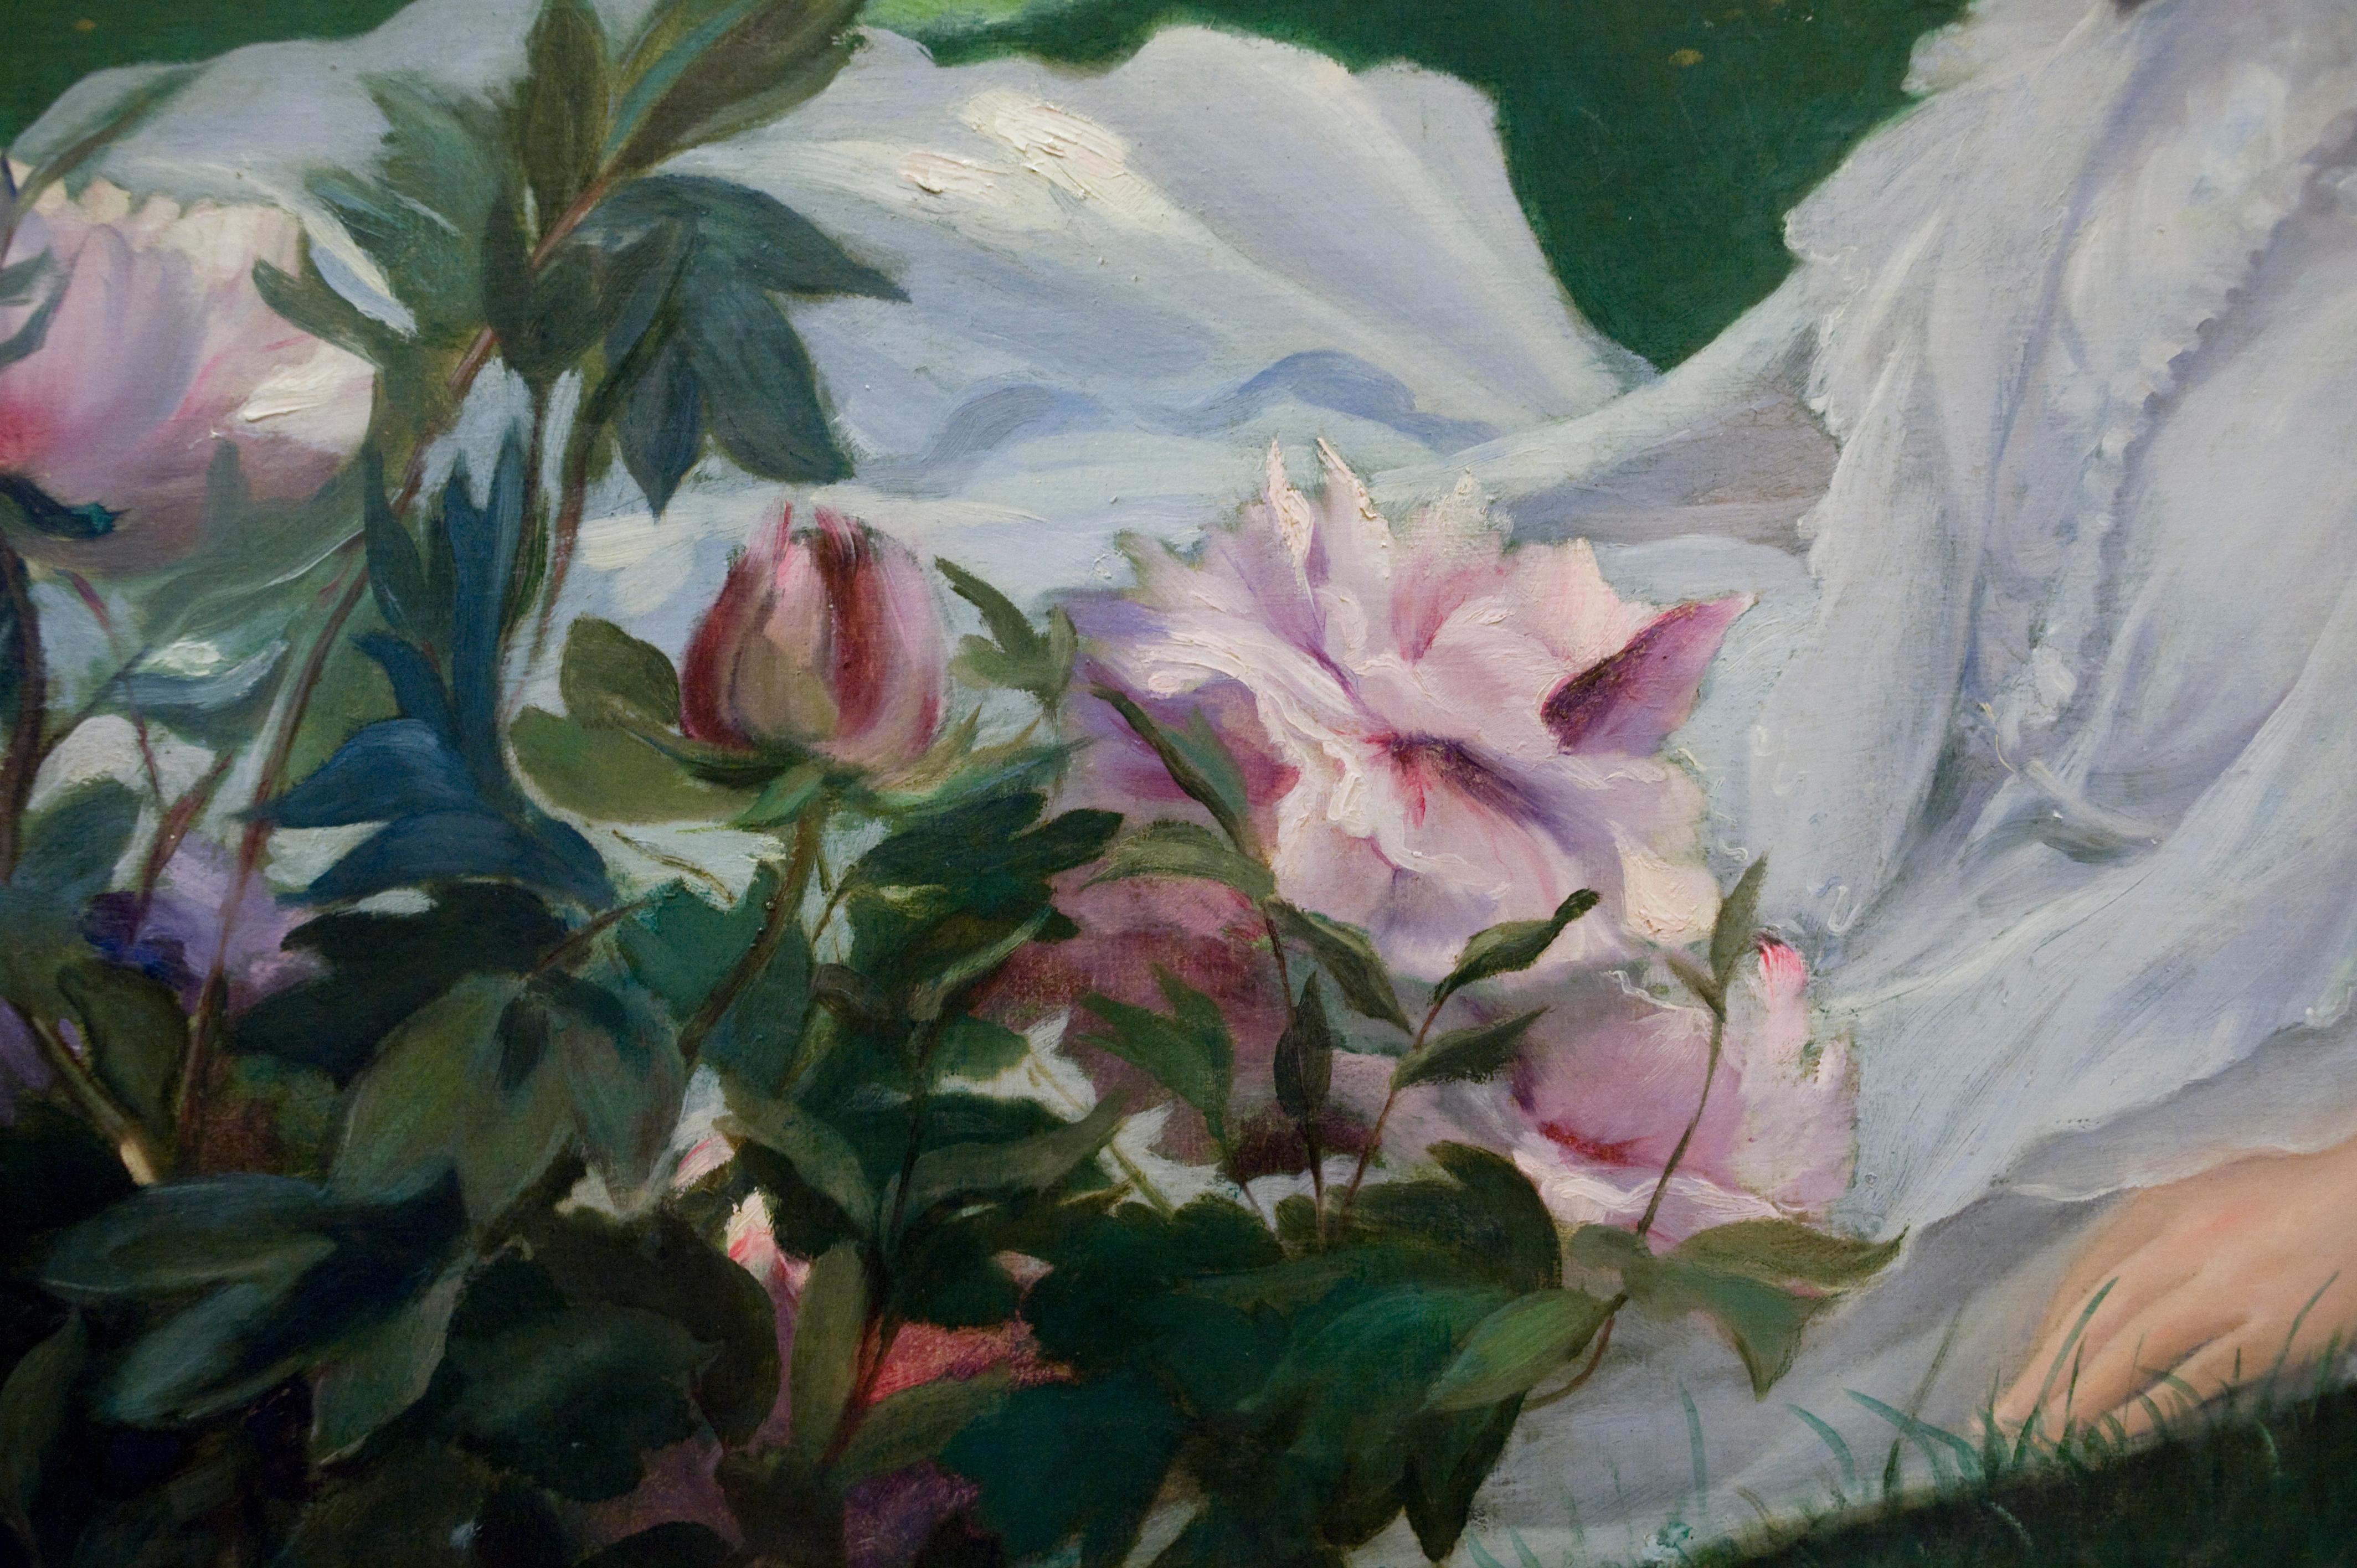 Henriette Chabot mit Pfingstrosen  – Painting von Jacques Emile Blanche